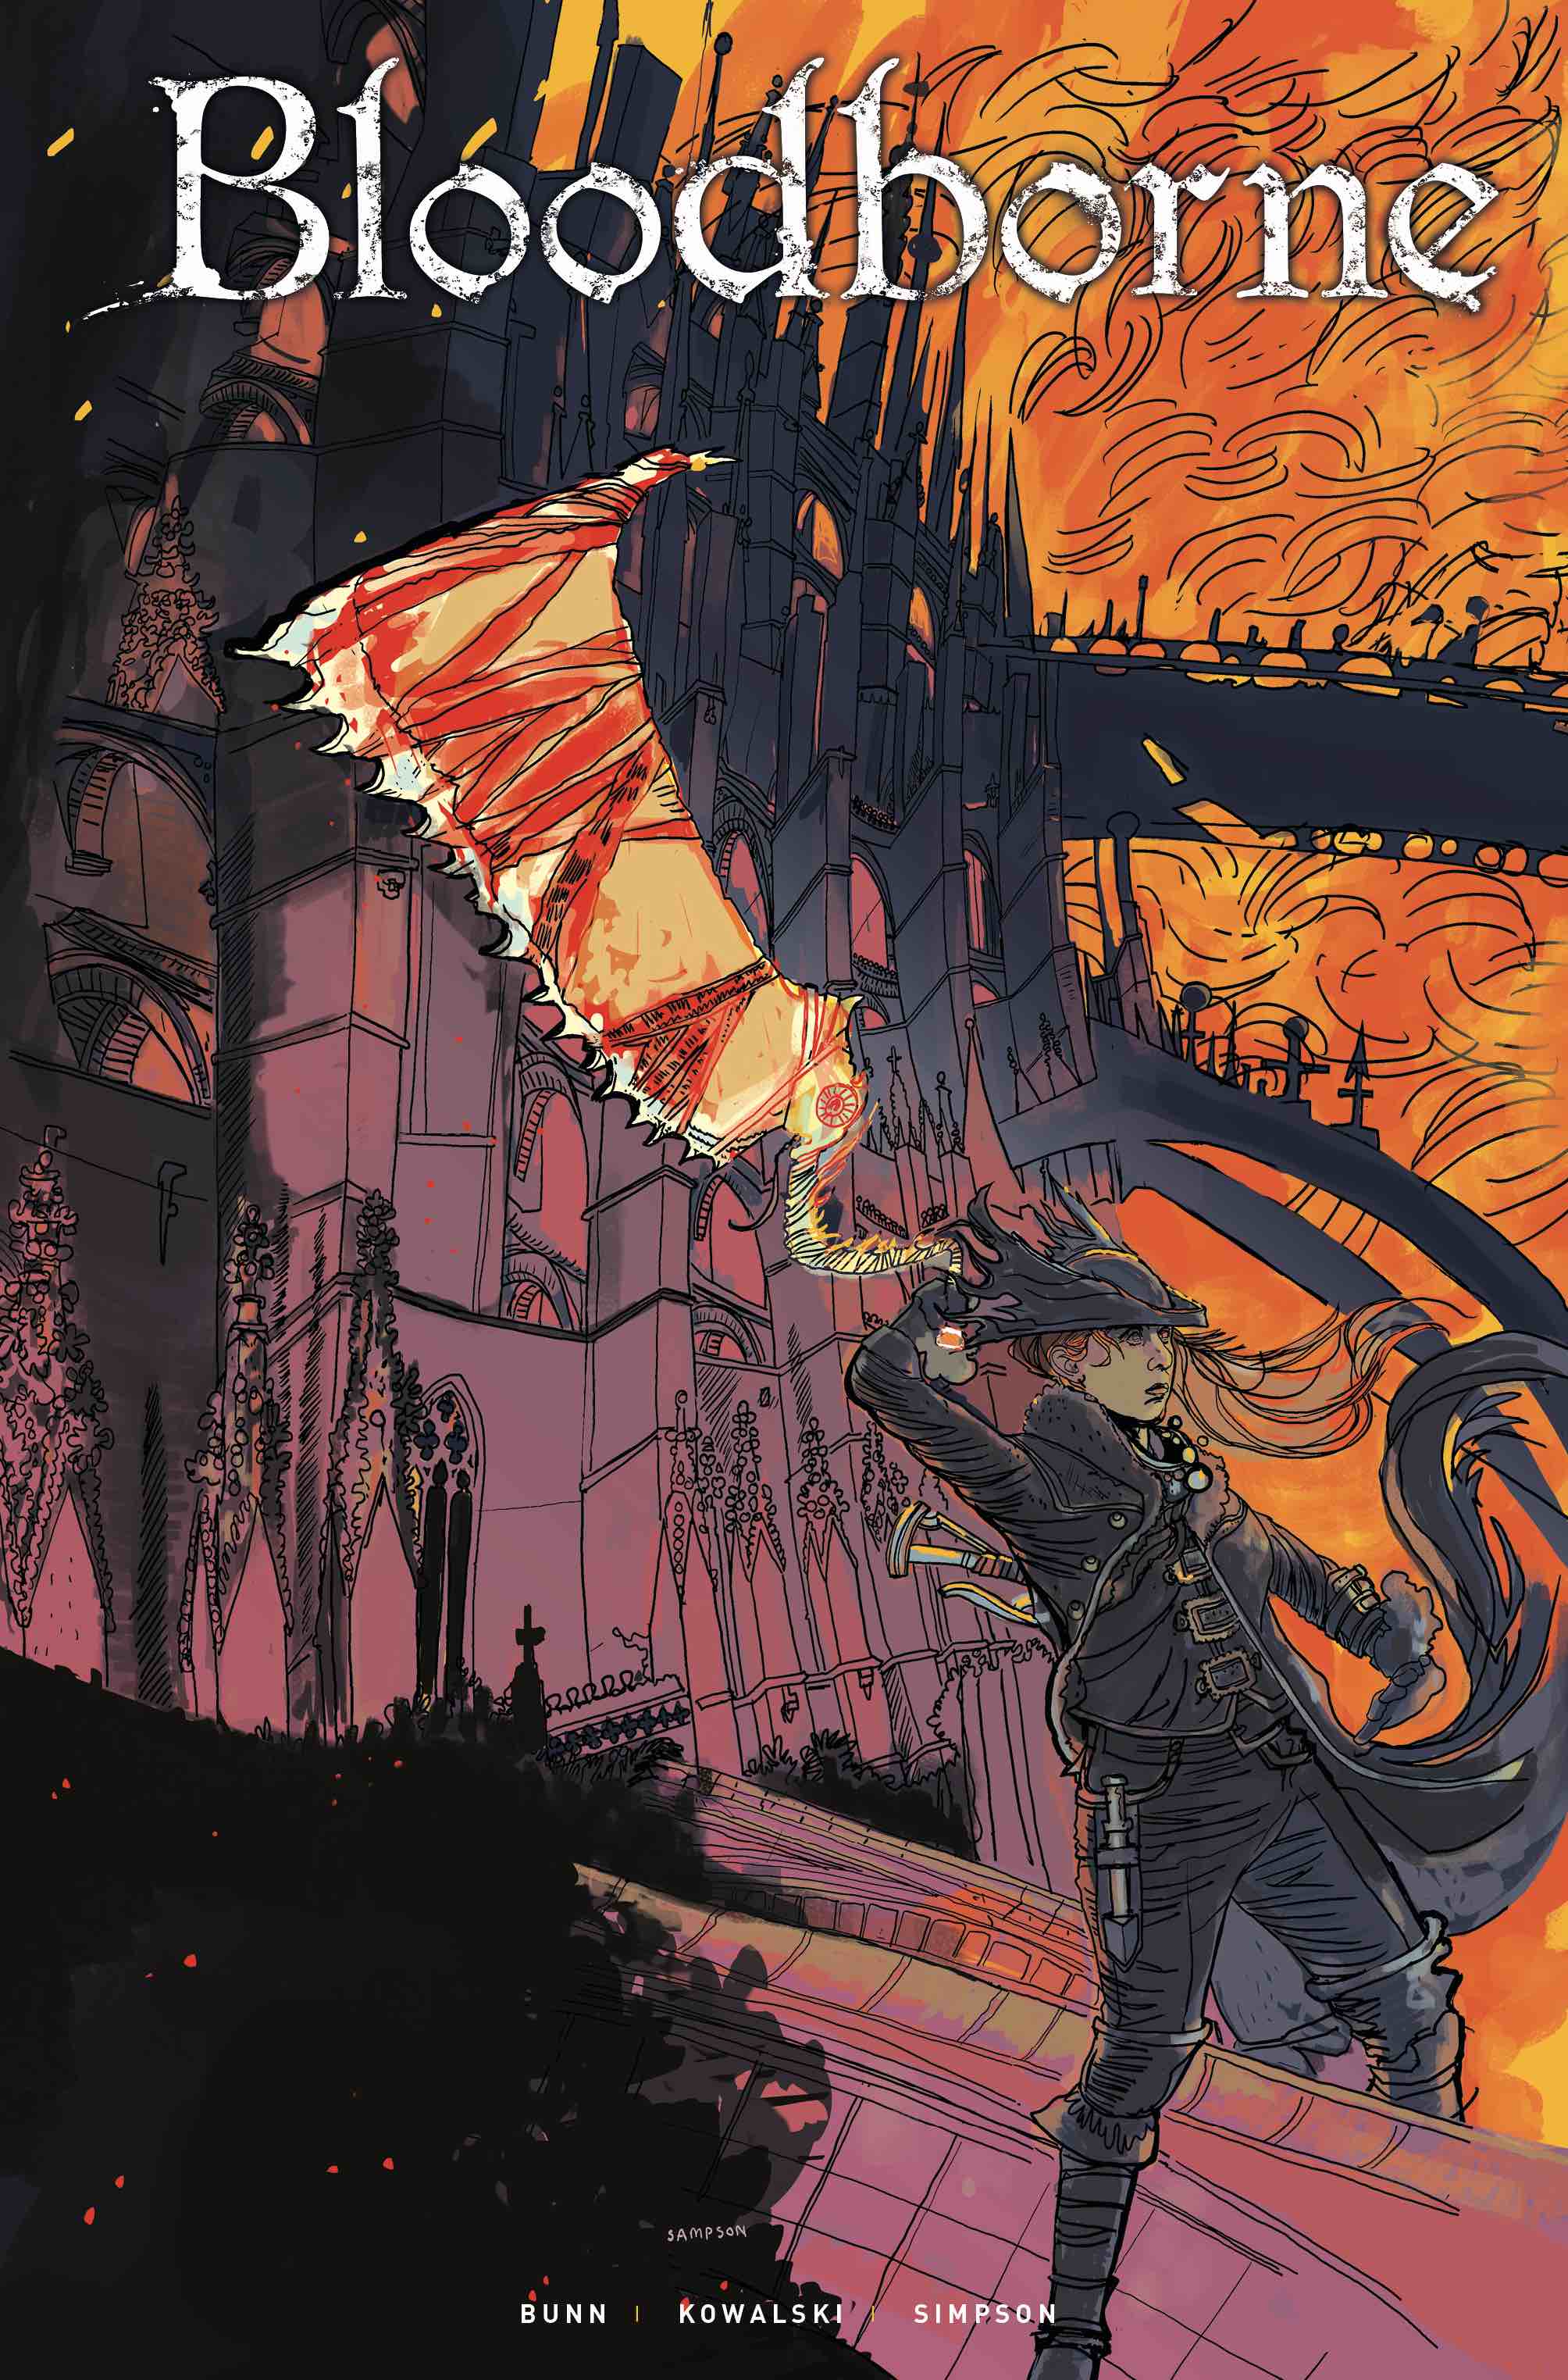 Bloodborne: Lady of the Lanterns #2 portada principal por Alison Sampson